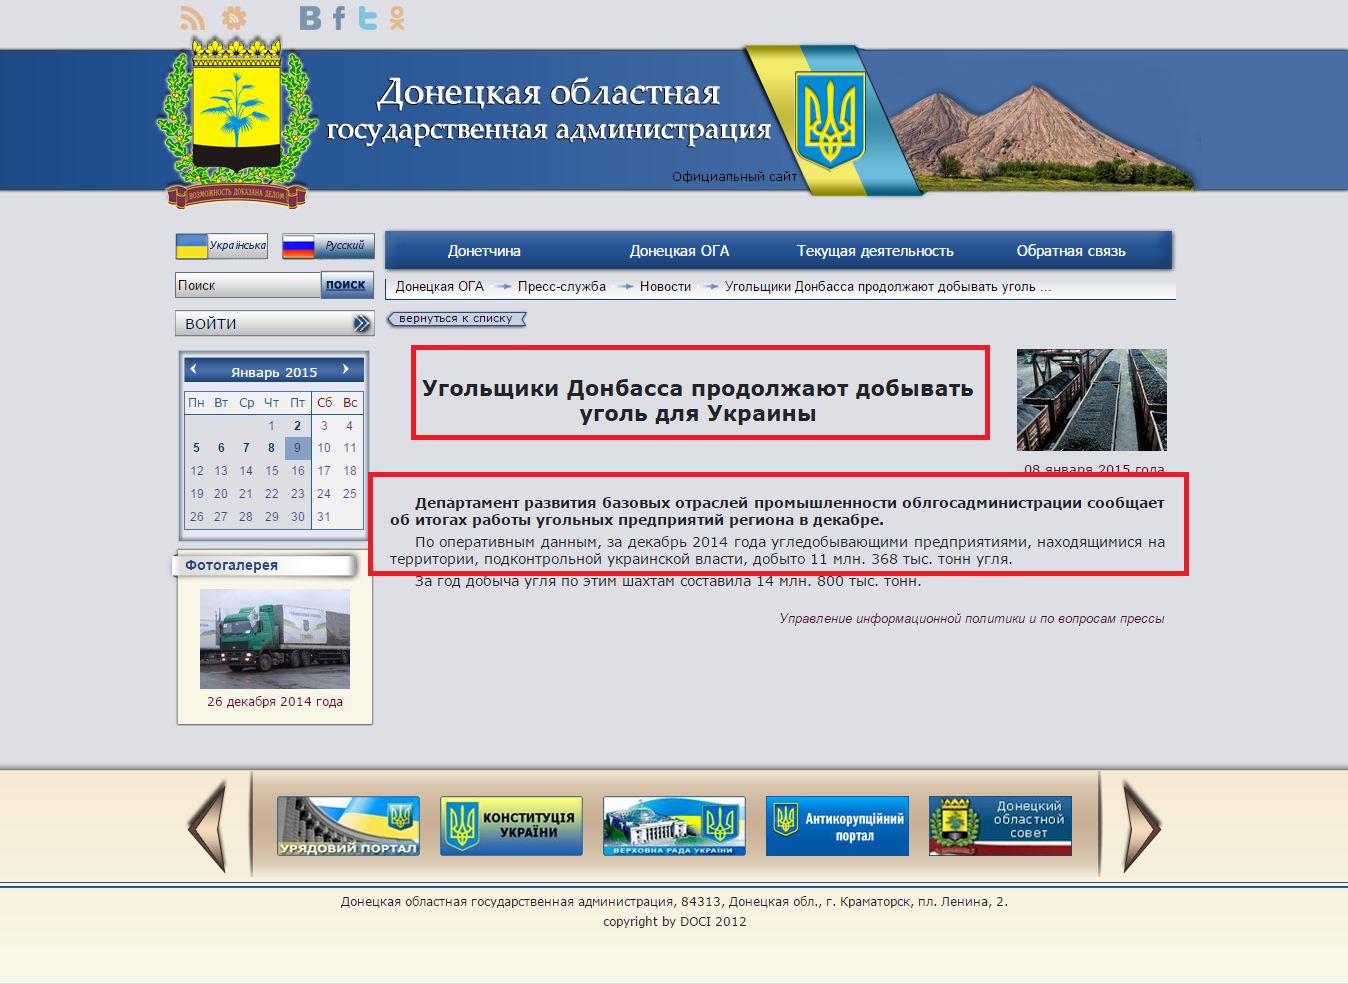 http://donoda.gov.ua/?lang=ru&sec=02.03.09&iface=Public&cmd=view&args=id:23137